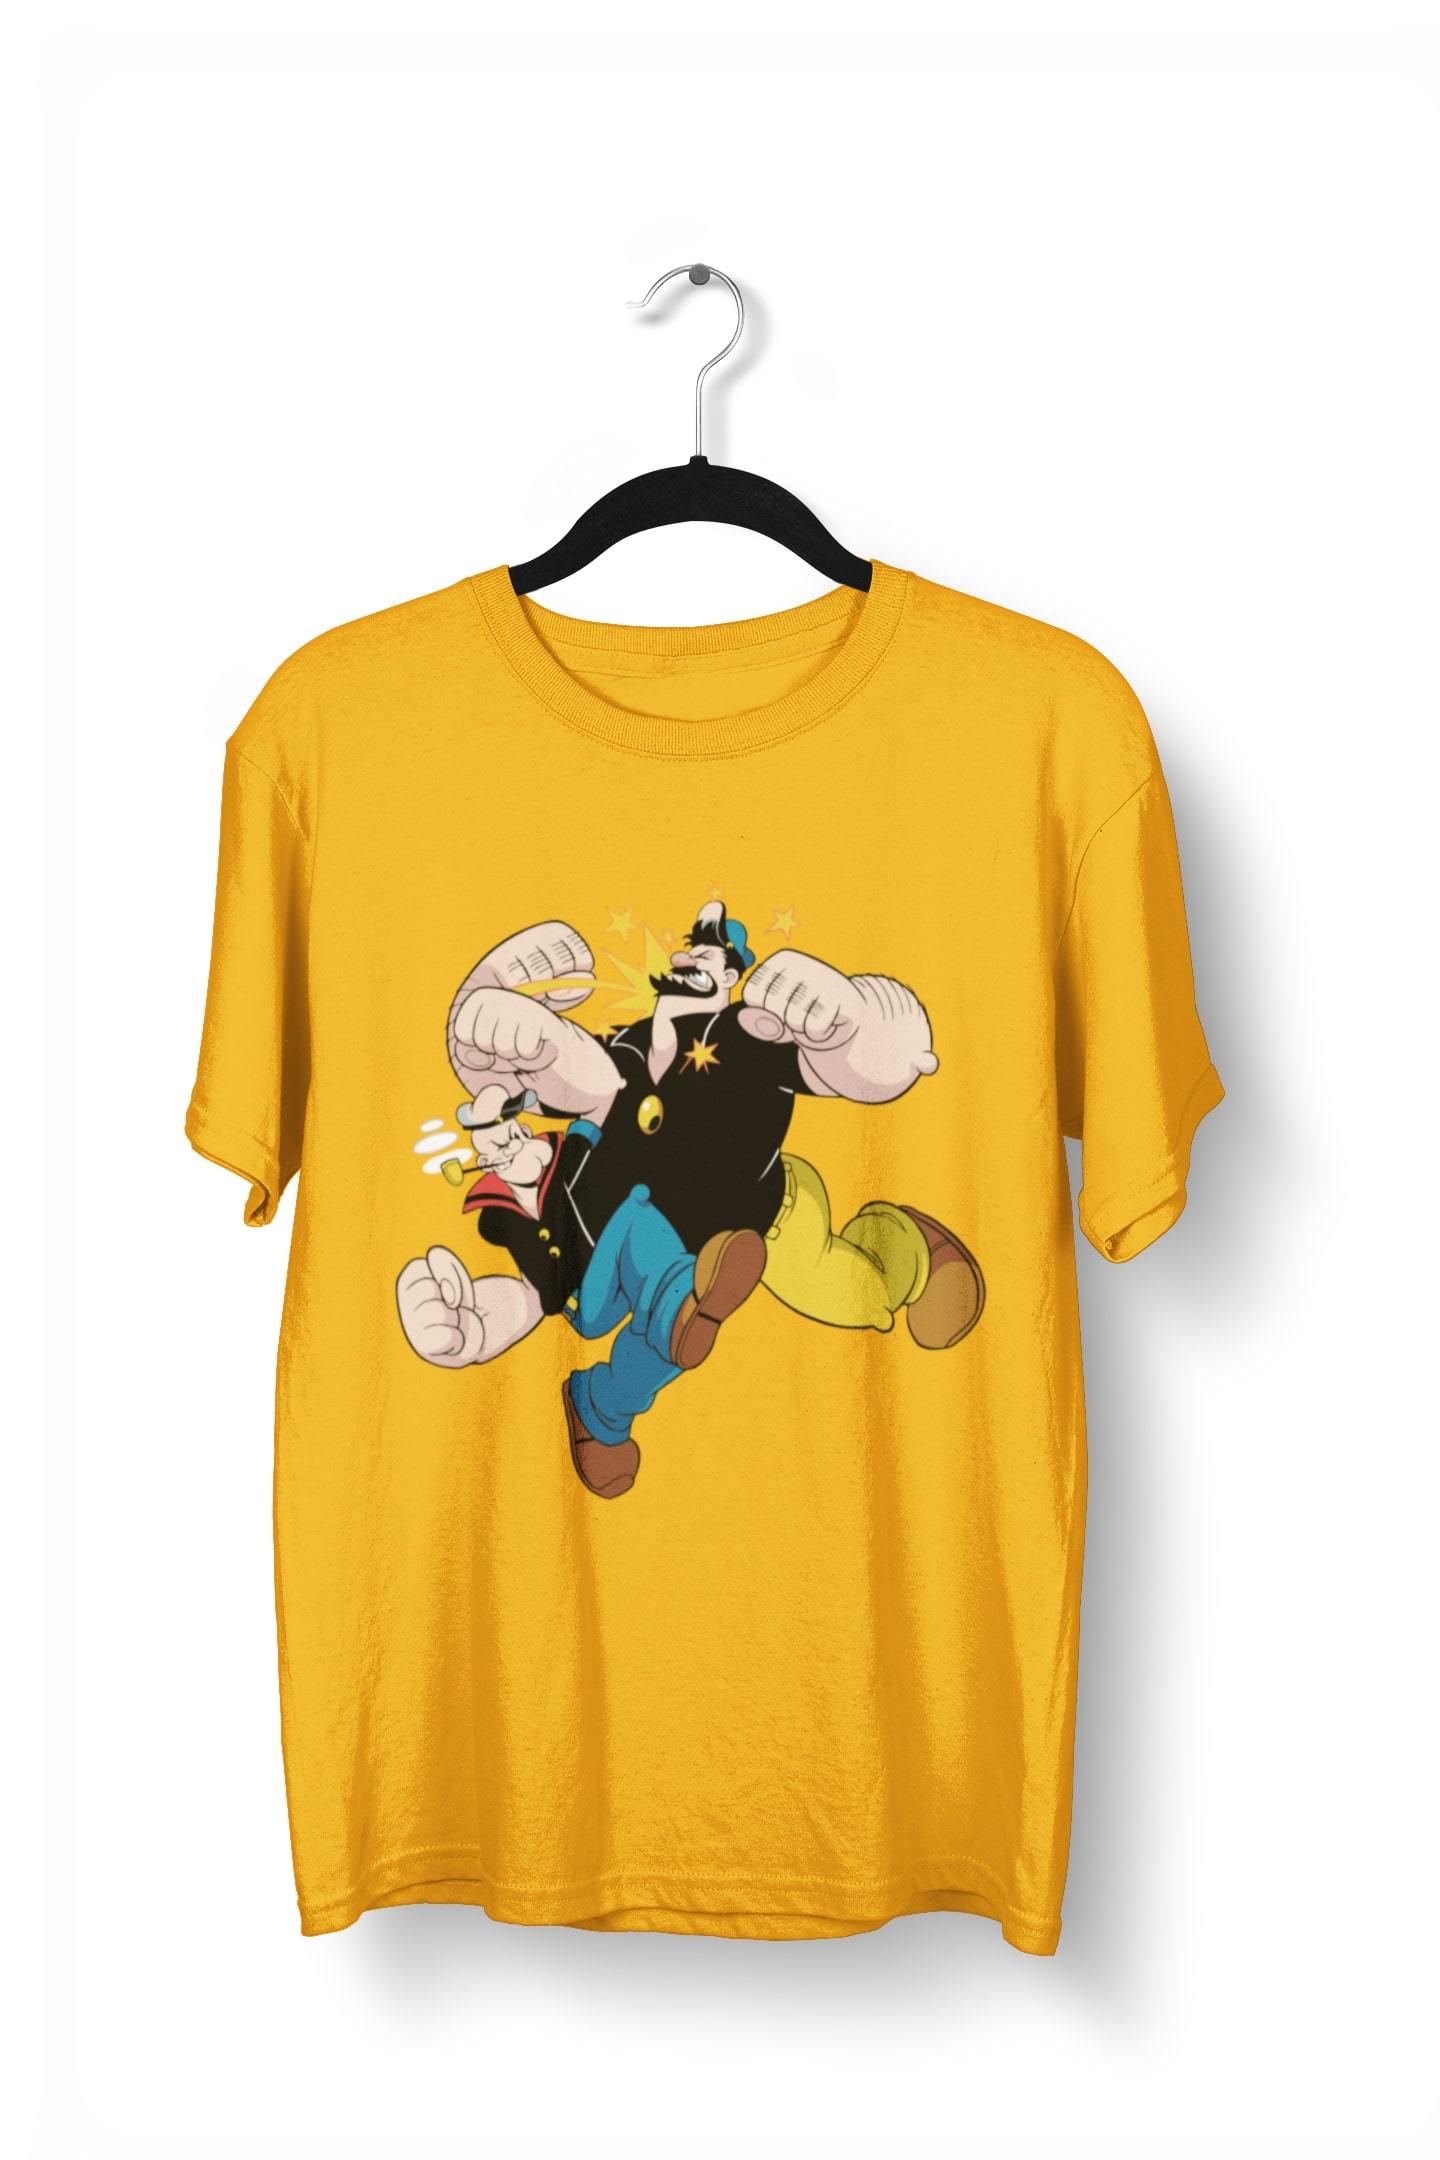 thelegalgang,Popeye Bluto T-Shirt for Men,.